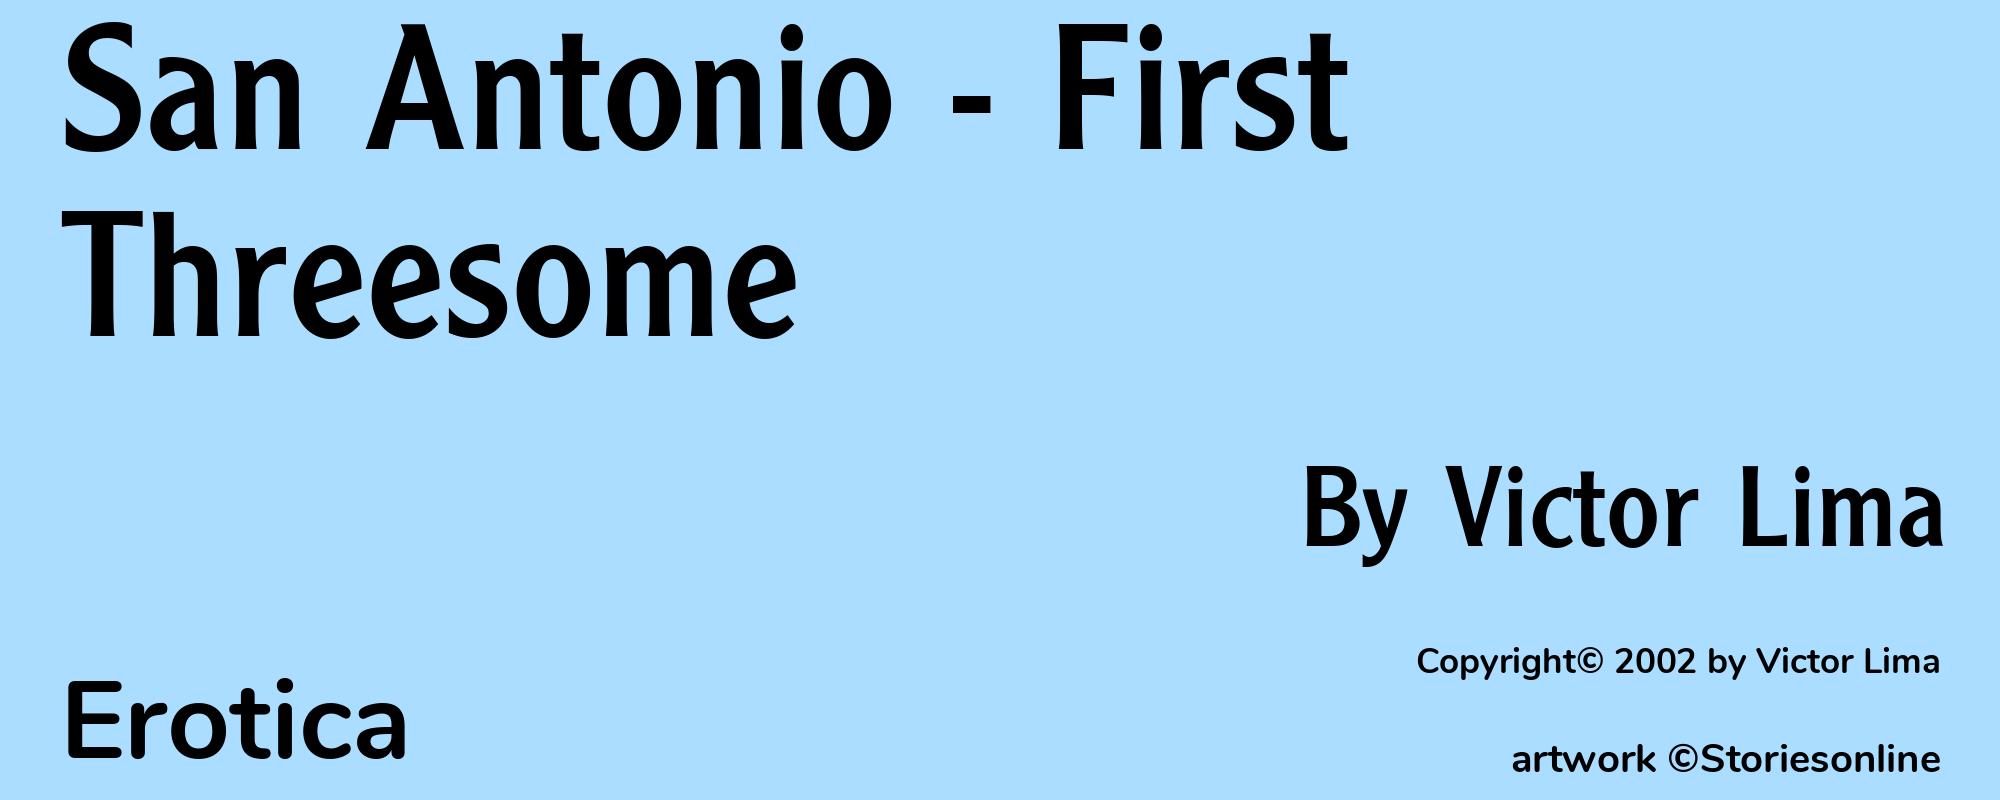 San Antonio - First Threesome - Cover